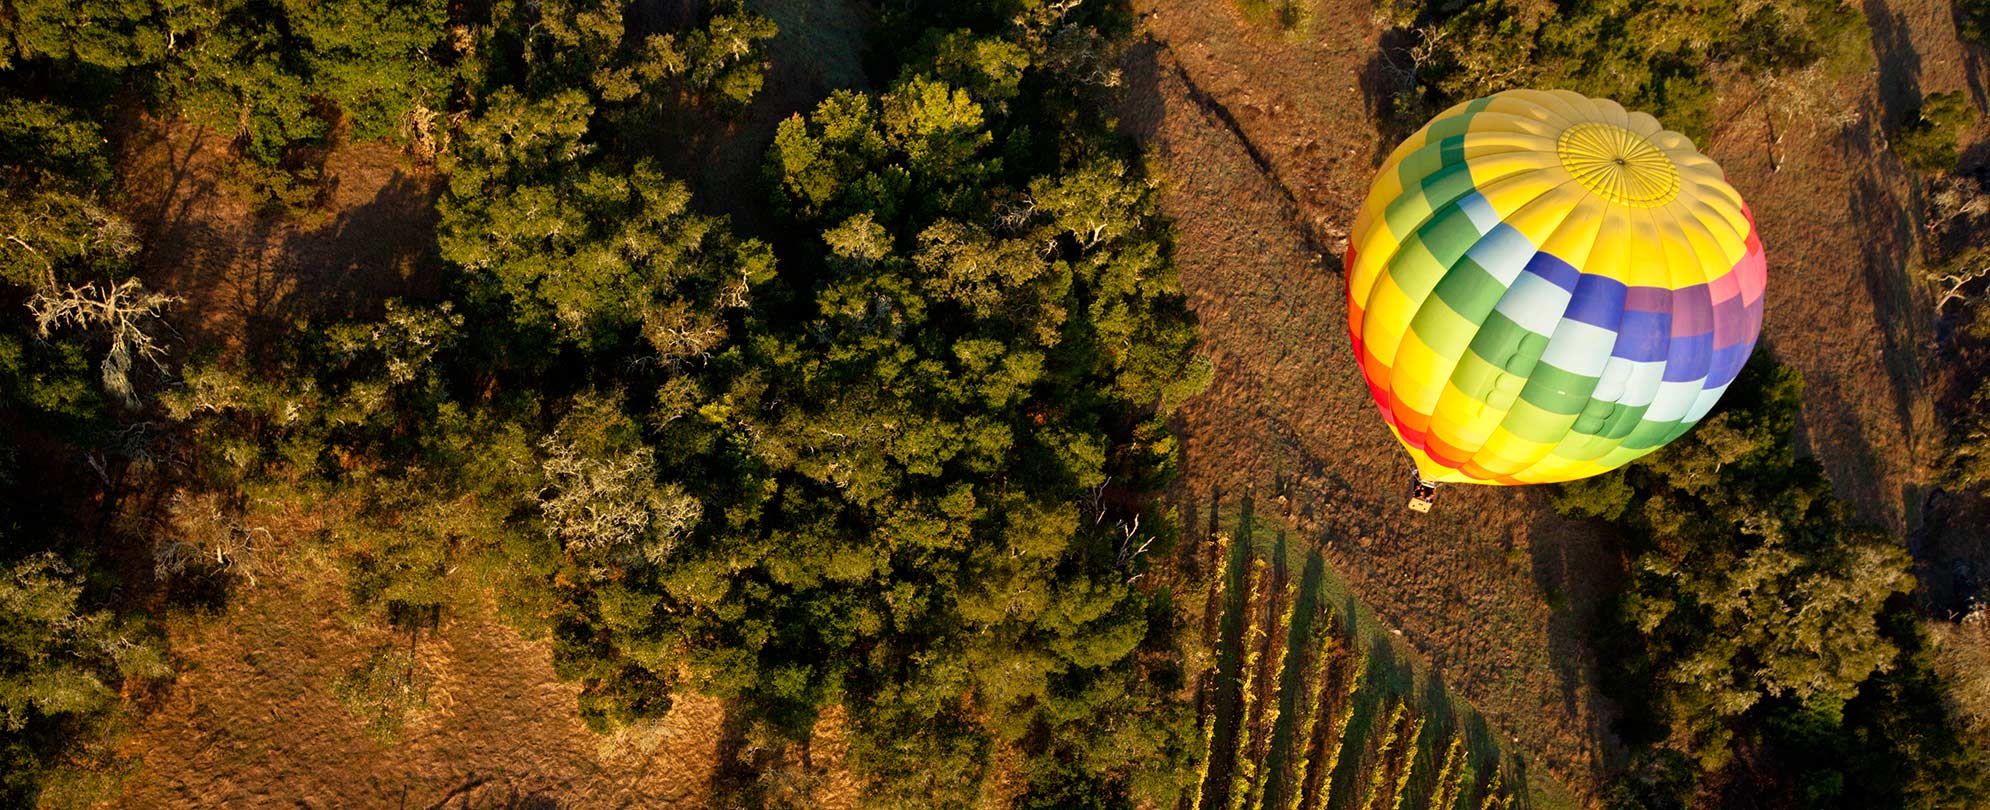 A colorful hot air balloon floats above a vineyard in Napa, California